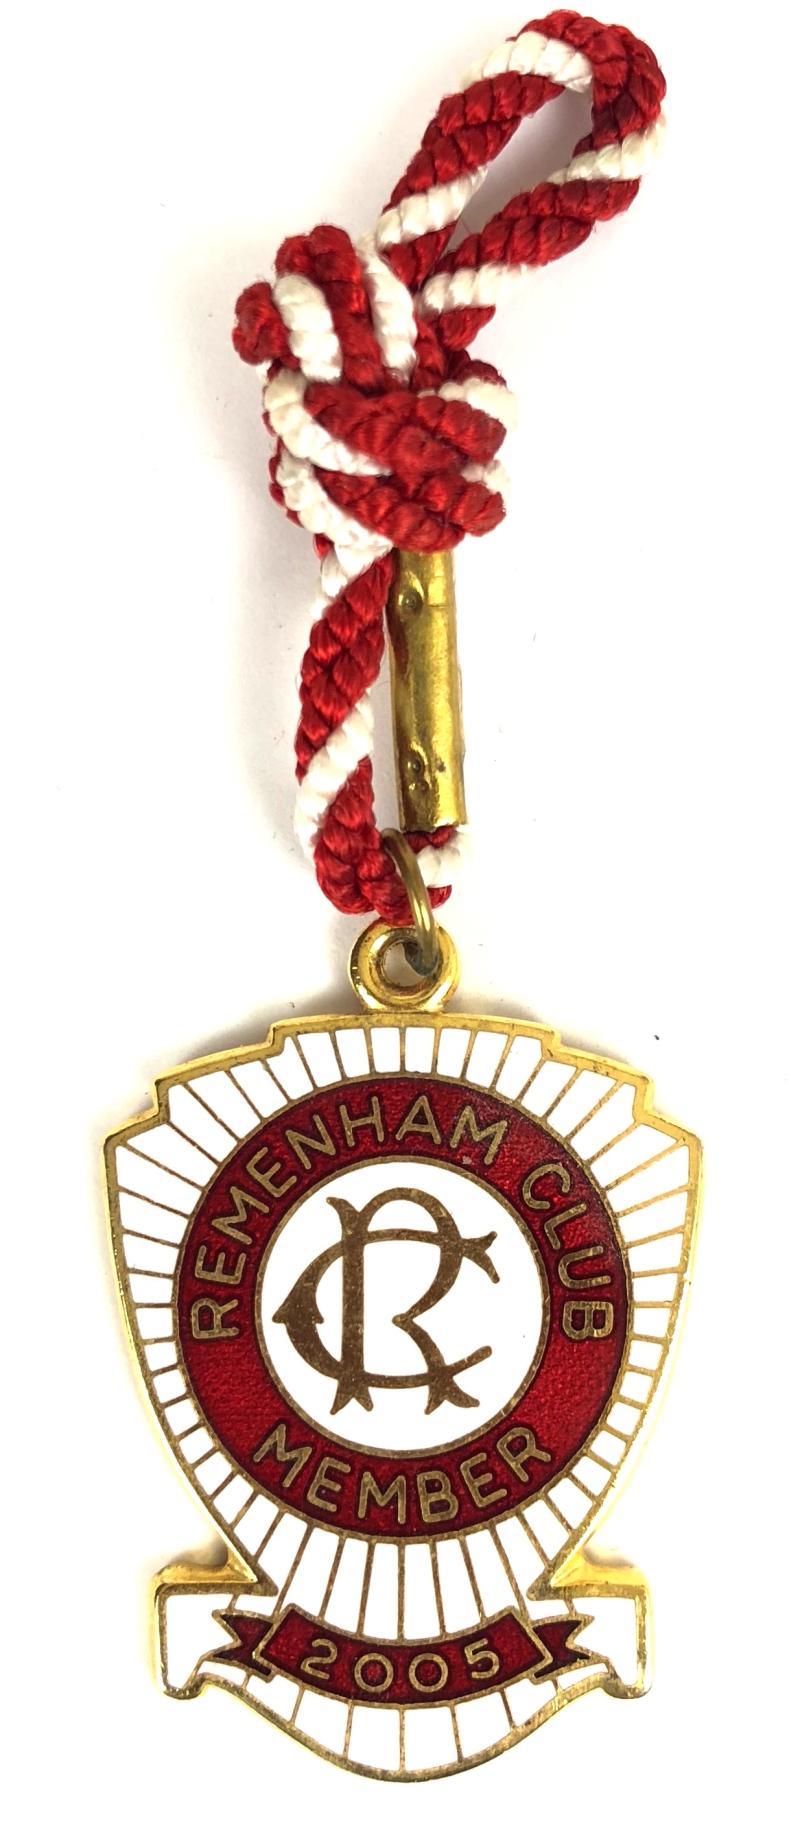 2005 Remenham Rowing Club badge Henley Royal Regatta